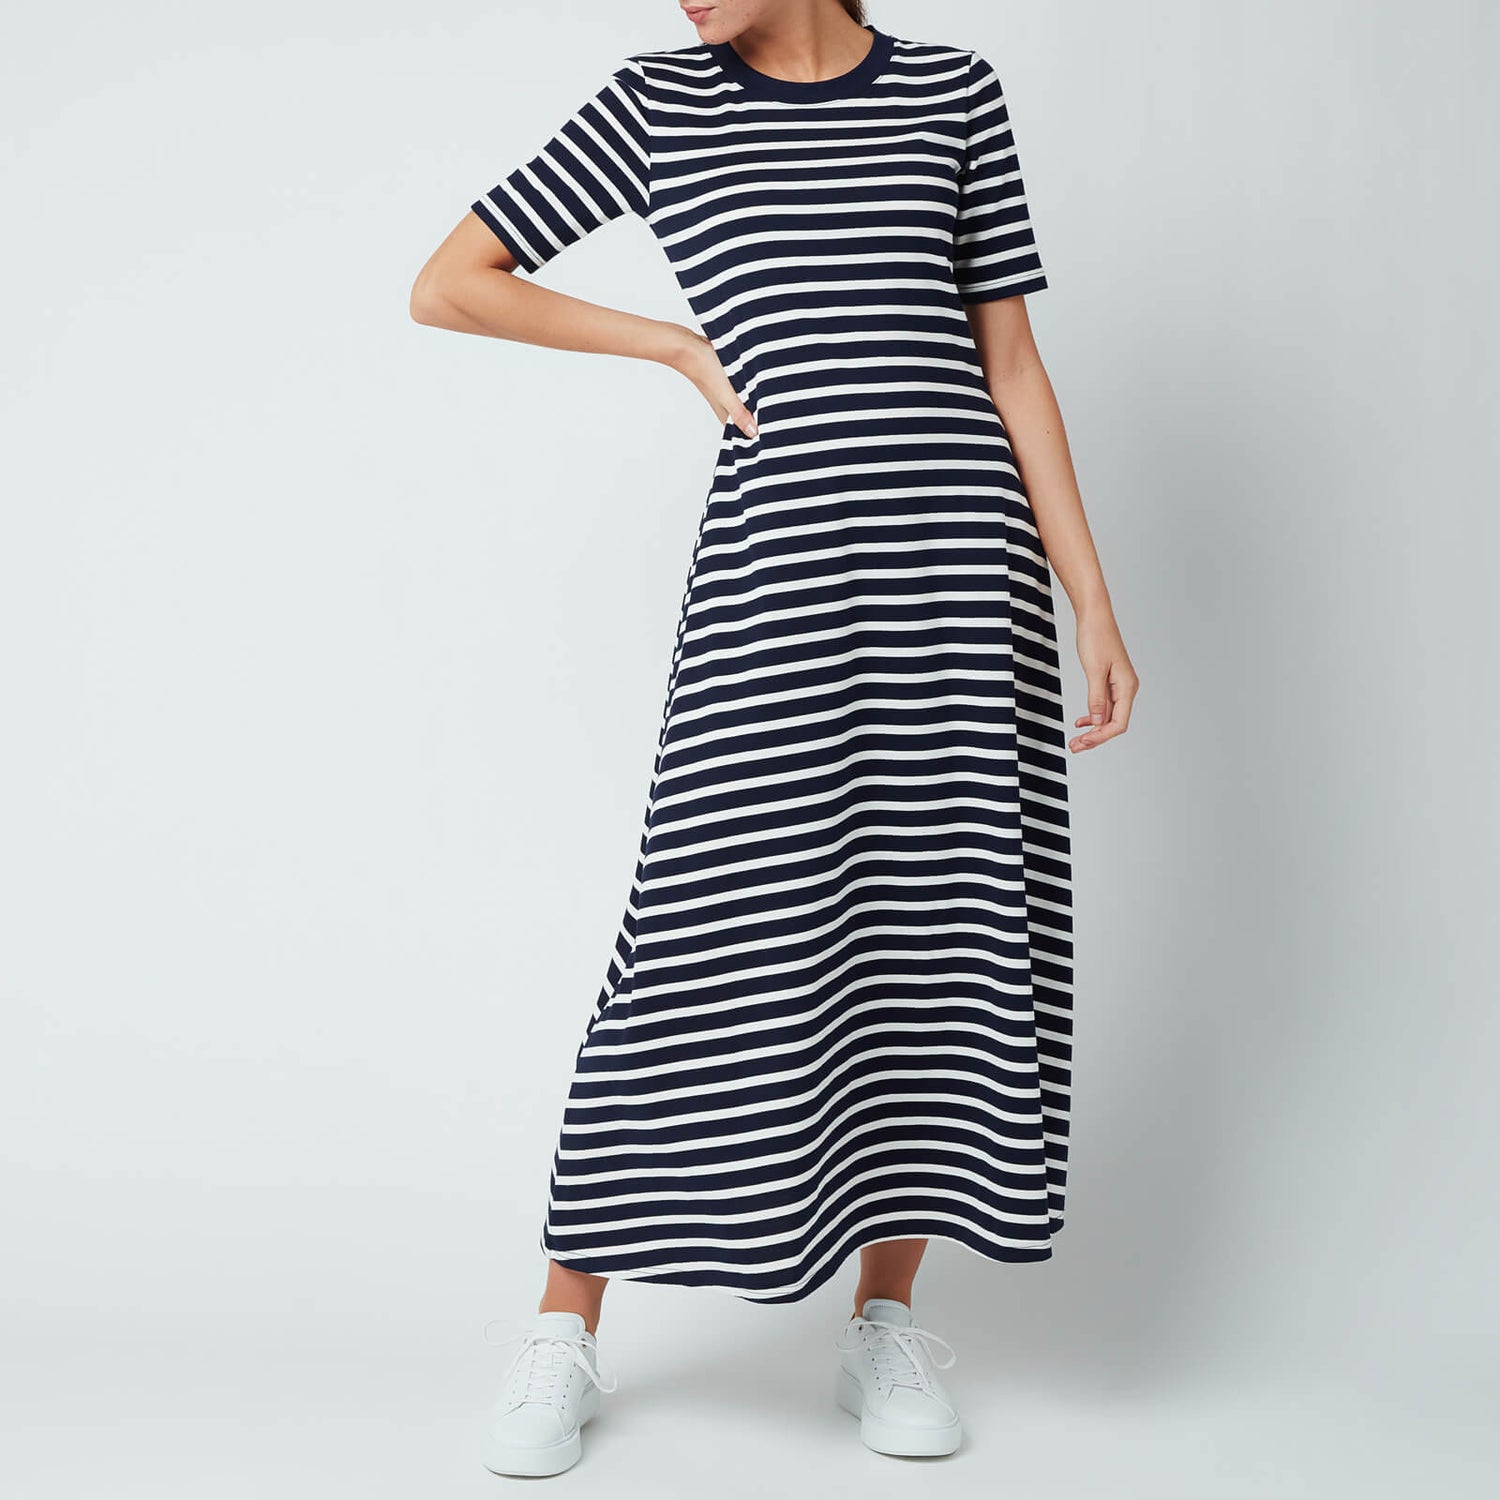 Kate Spade New York Women's Striped Midi Dress - Rich Navy